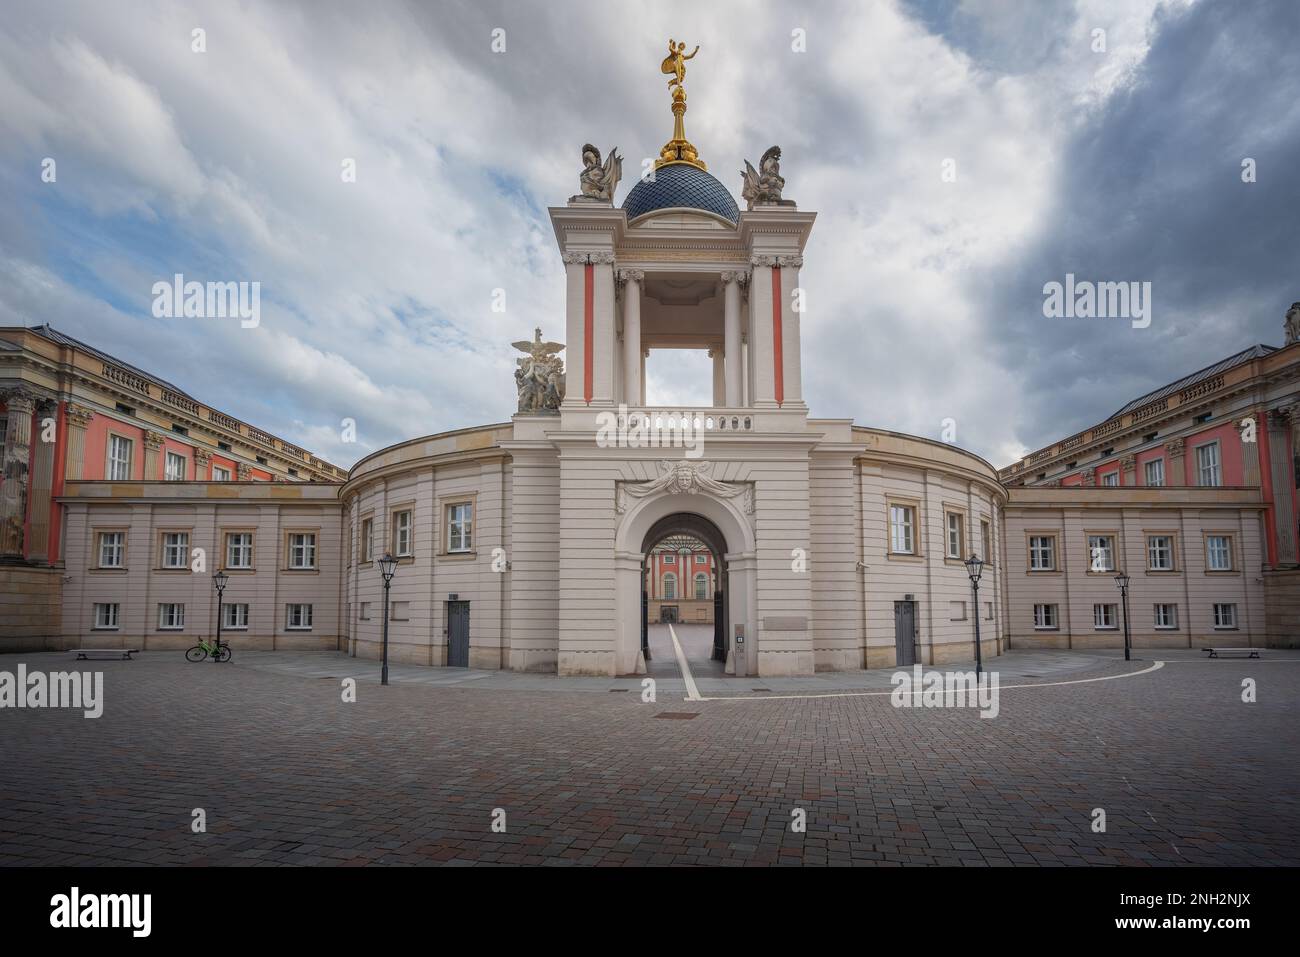 Fortuna Portal and Brandenburg Landtag (Parliament) at Old Market Square - Potsdam, Brandenburg, Germany Stock Photo